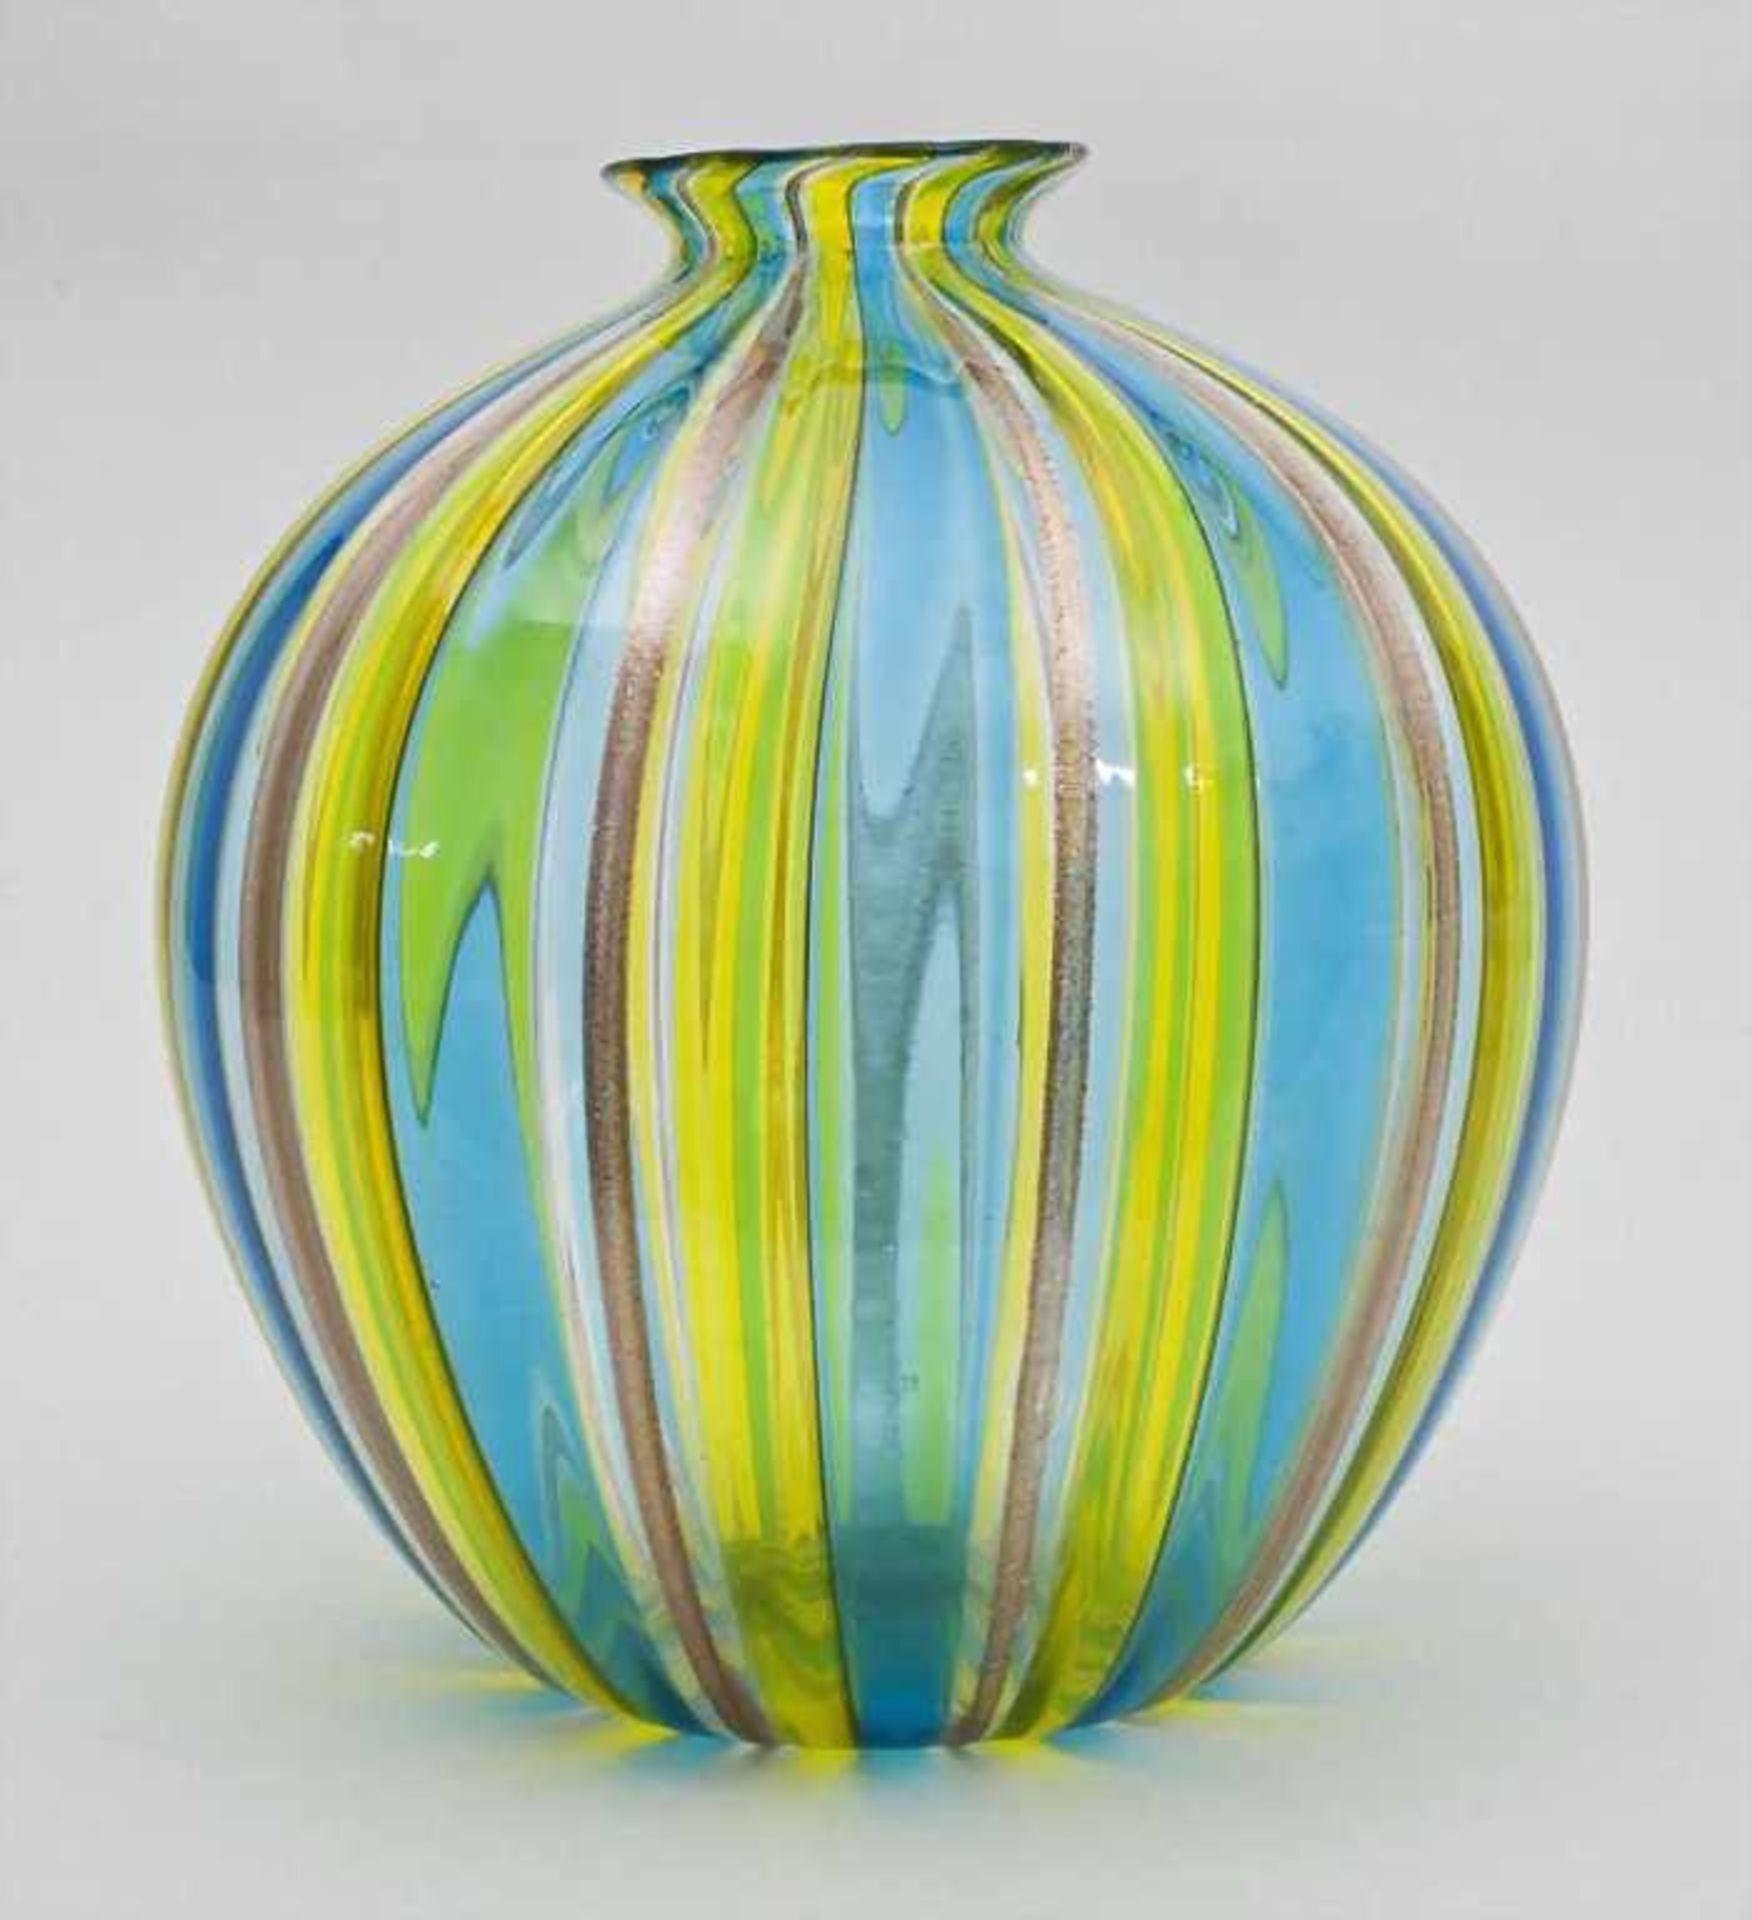 Kugelvase 'a canne' / A Spherical Vase, wohl Venini, Murano, Italien, um 1950bauchiger Korpus mit